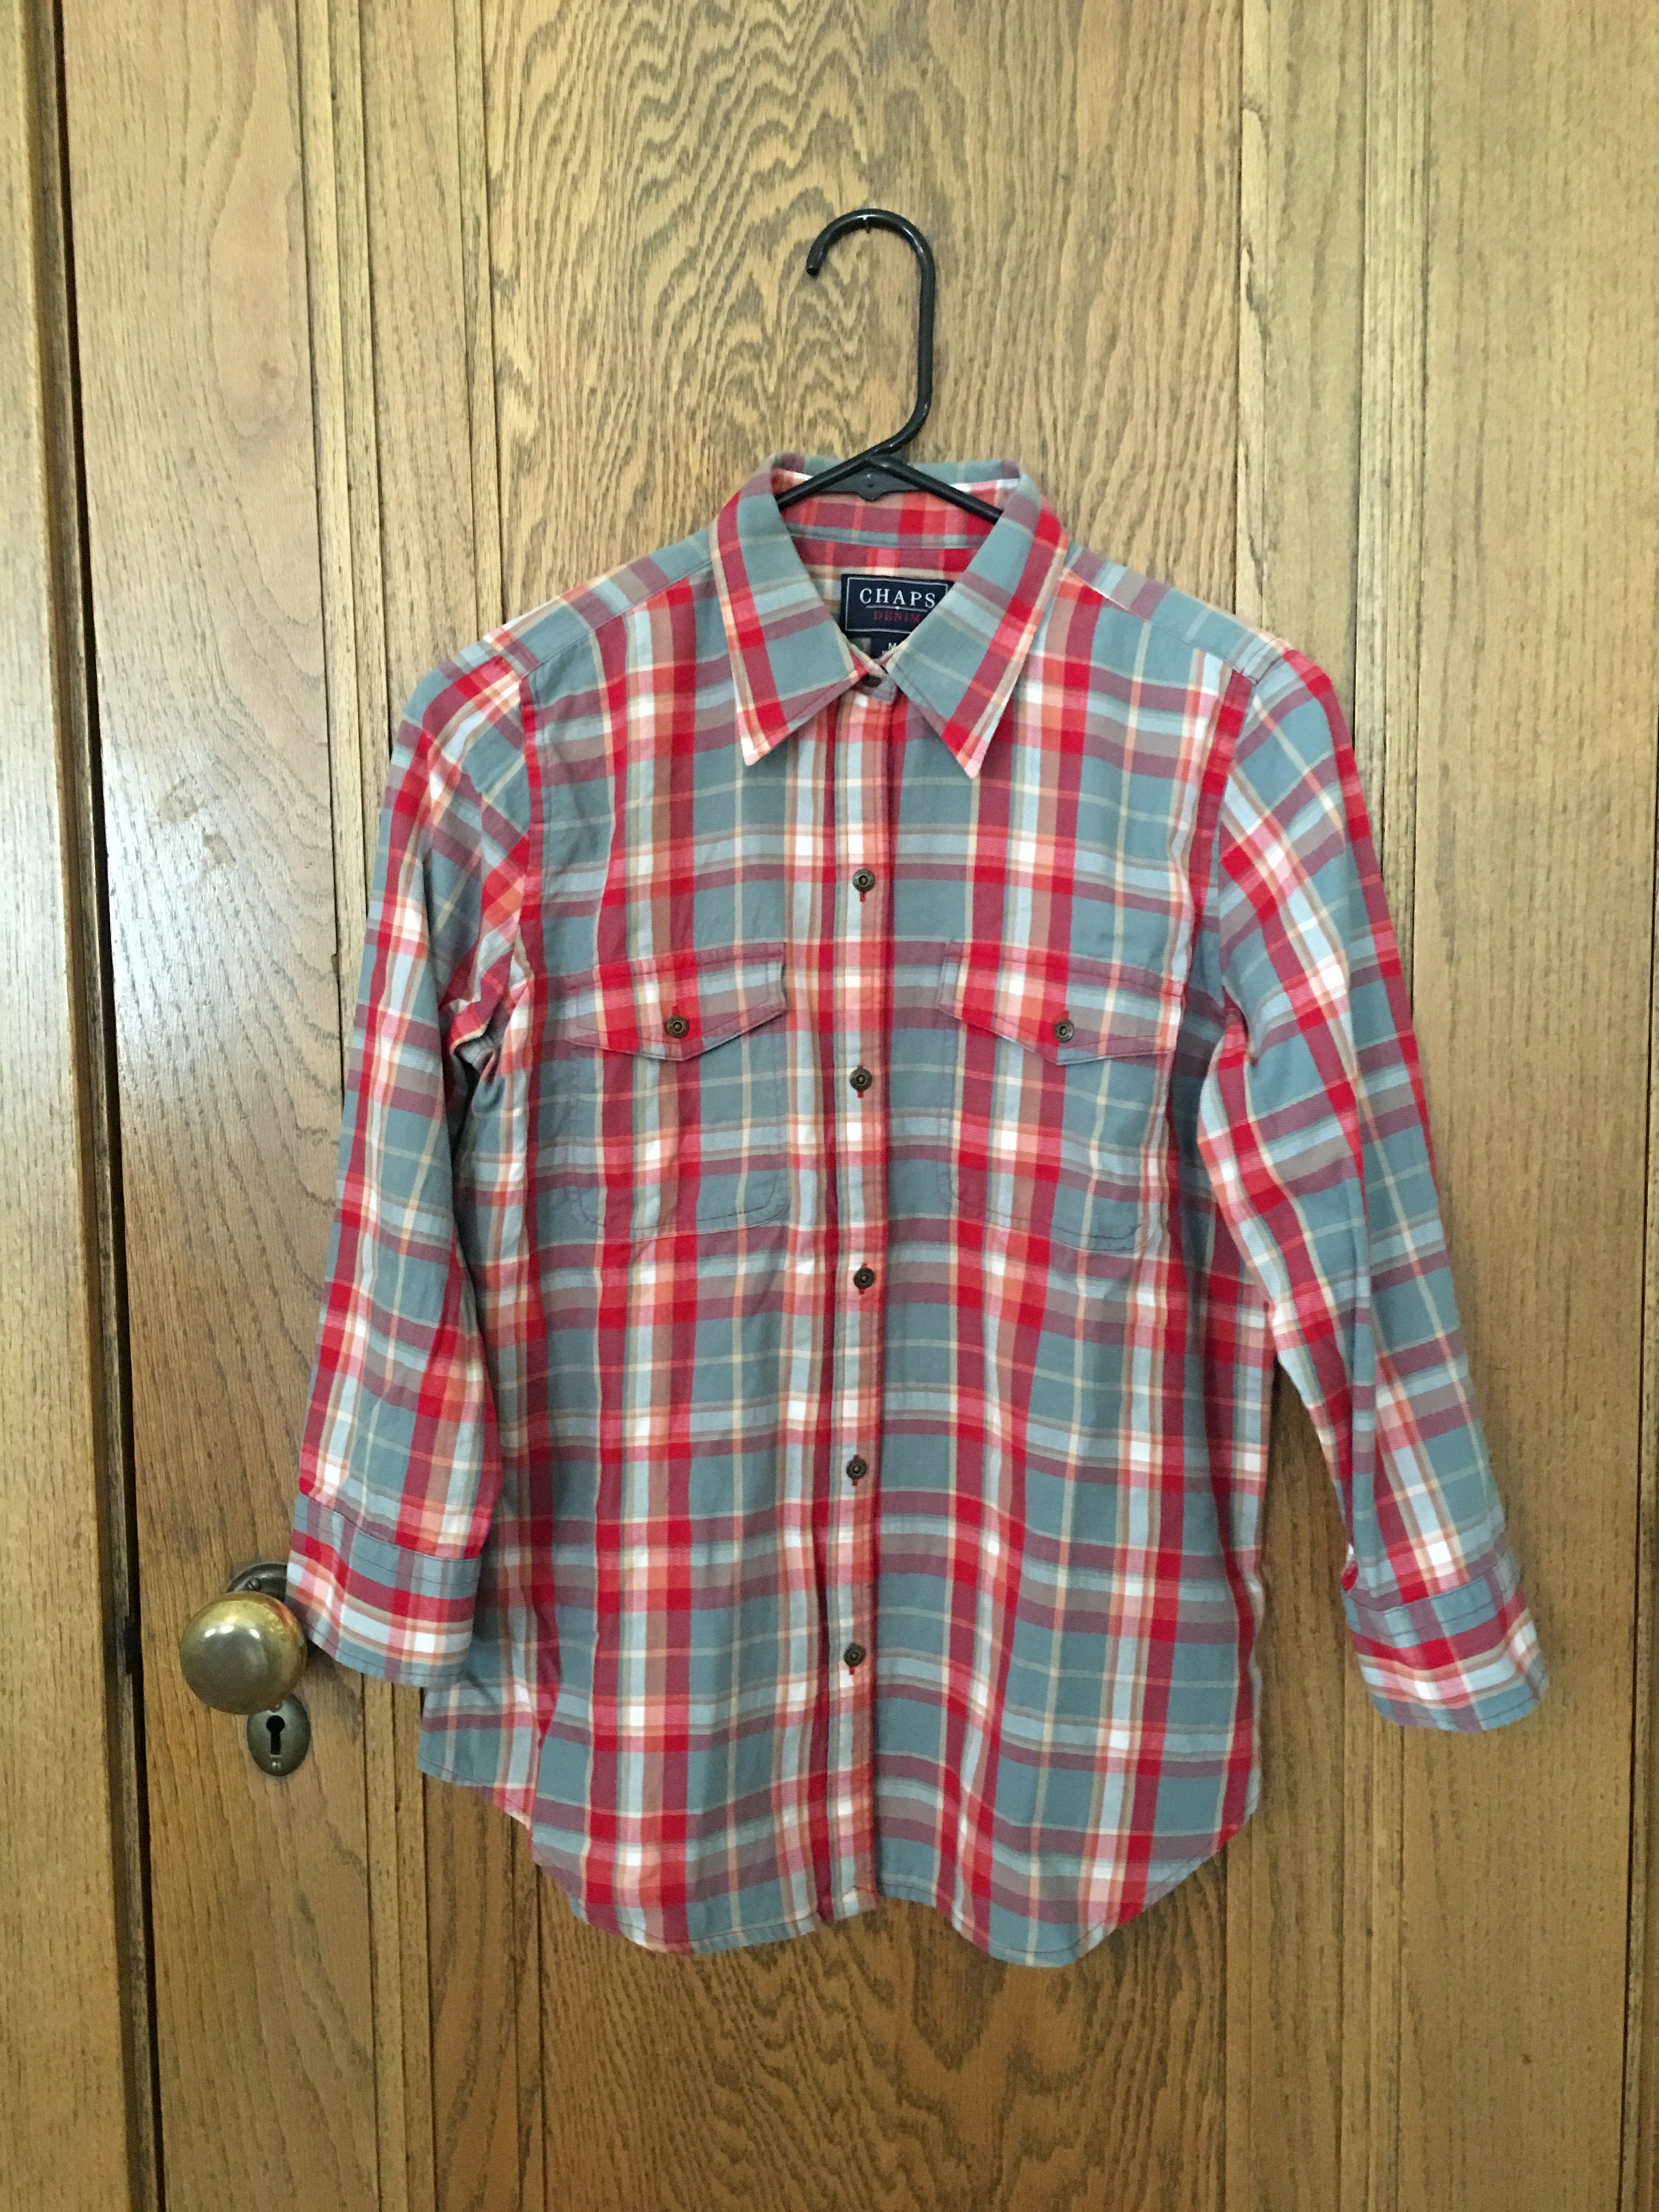 Vintage Ralph Lauren CHAPS DENIM Cotton Shirt Teal Red and - Etsy